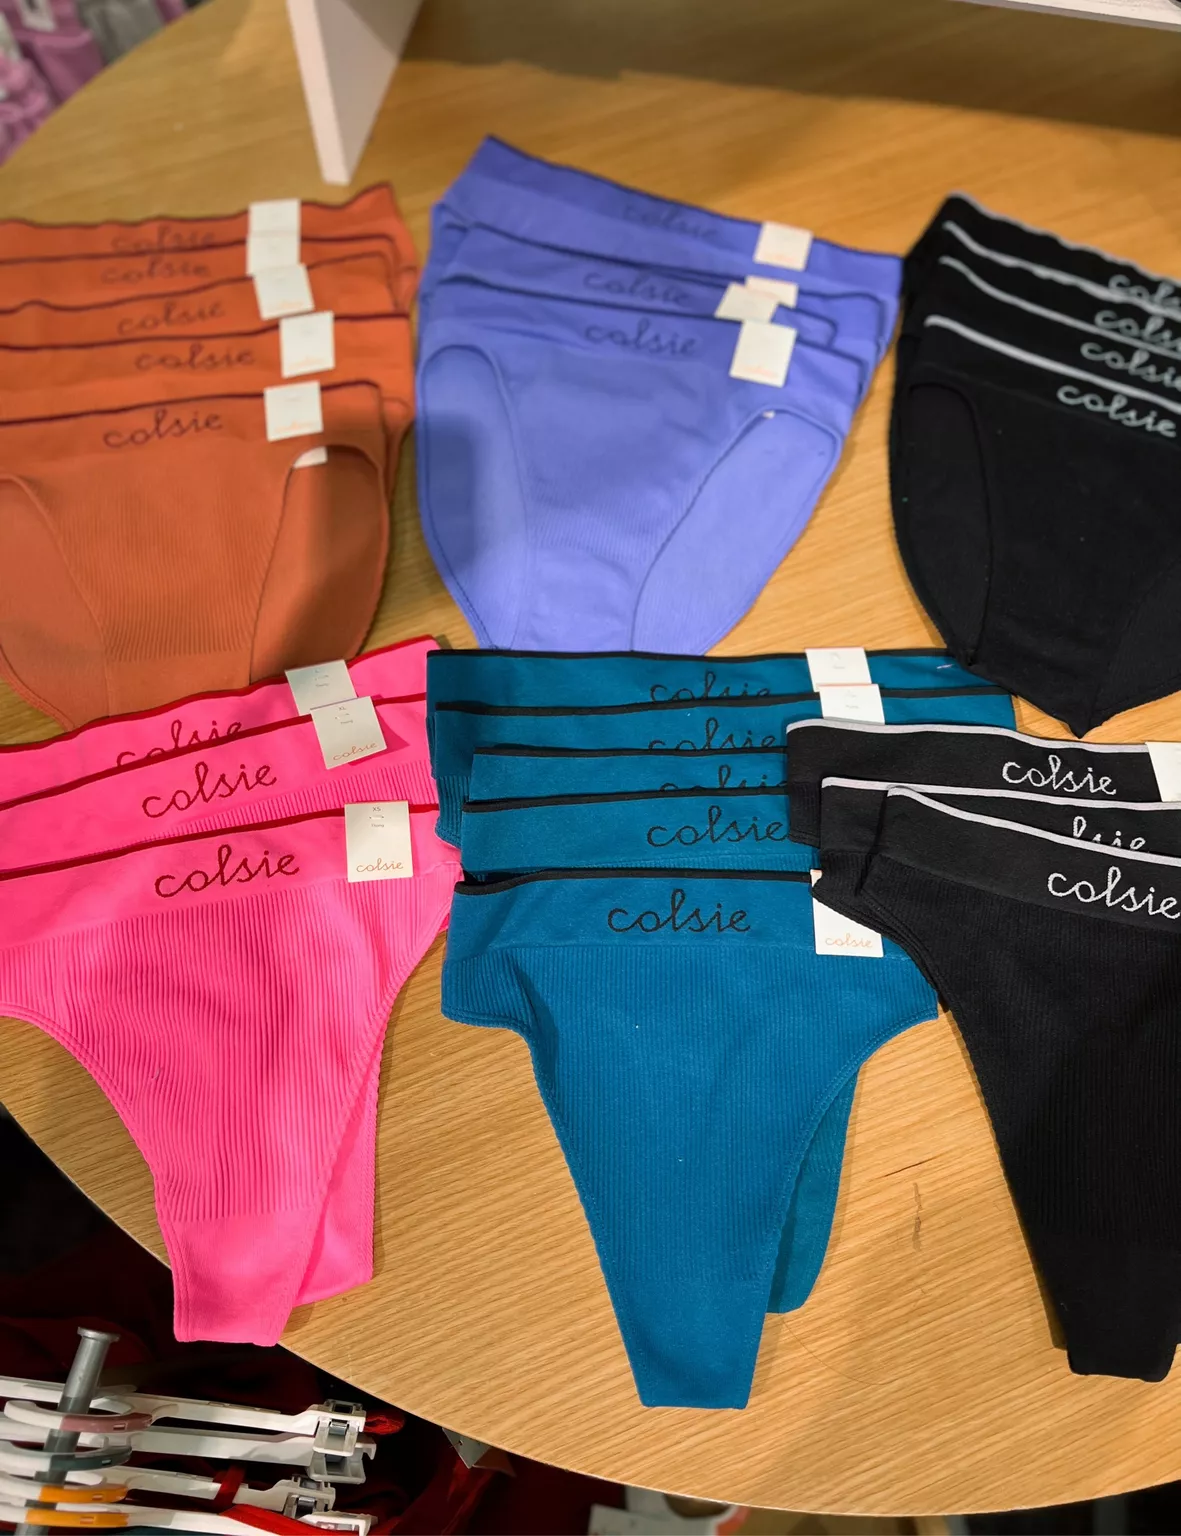 Hello Kitty : Panties & Underwear for Women : Target